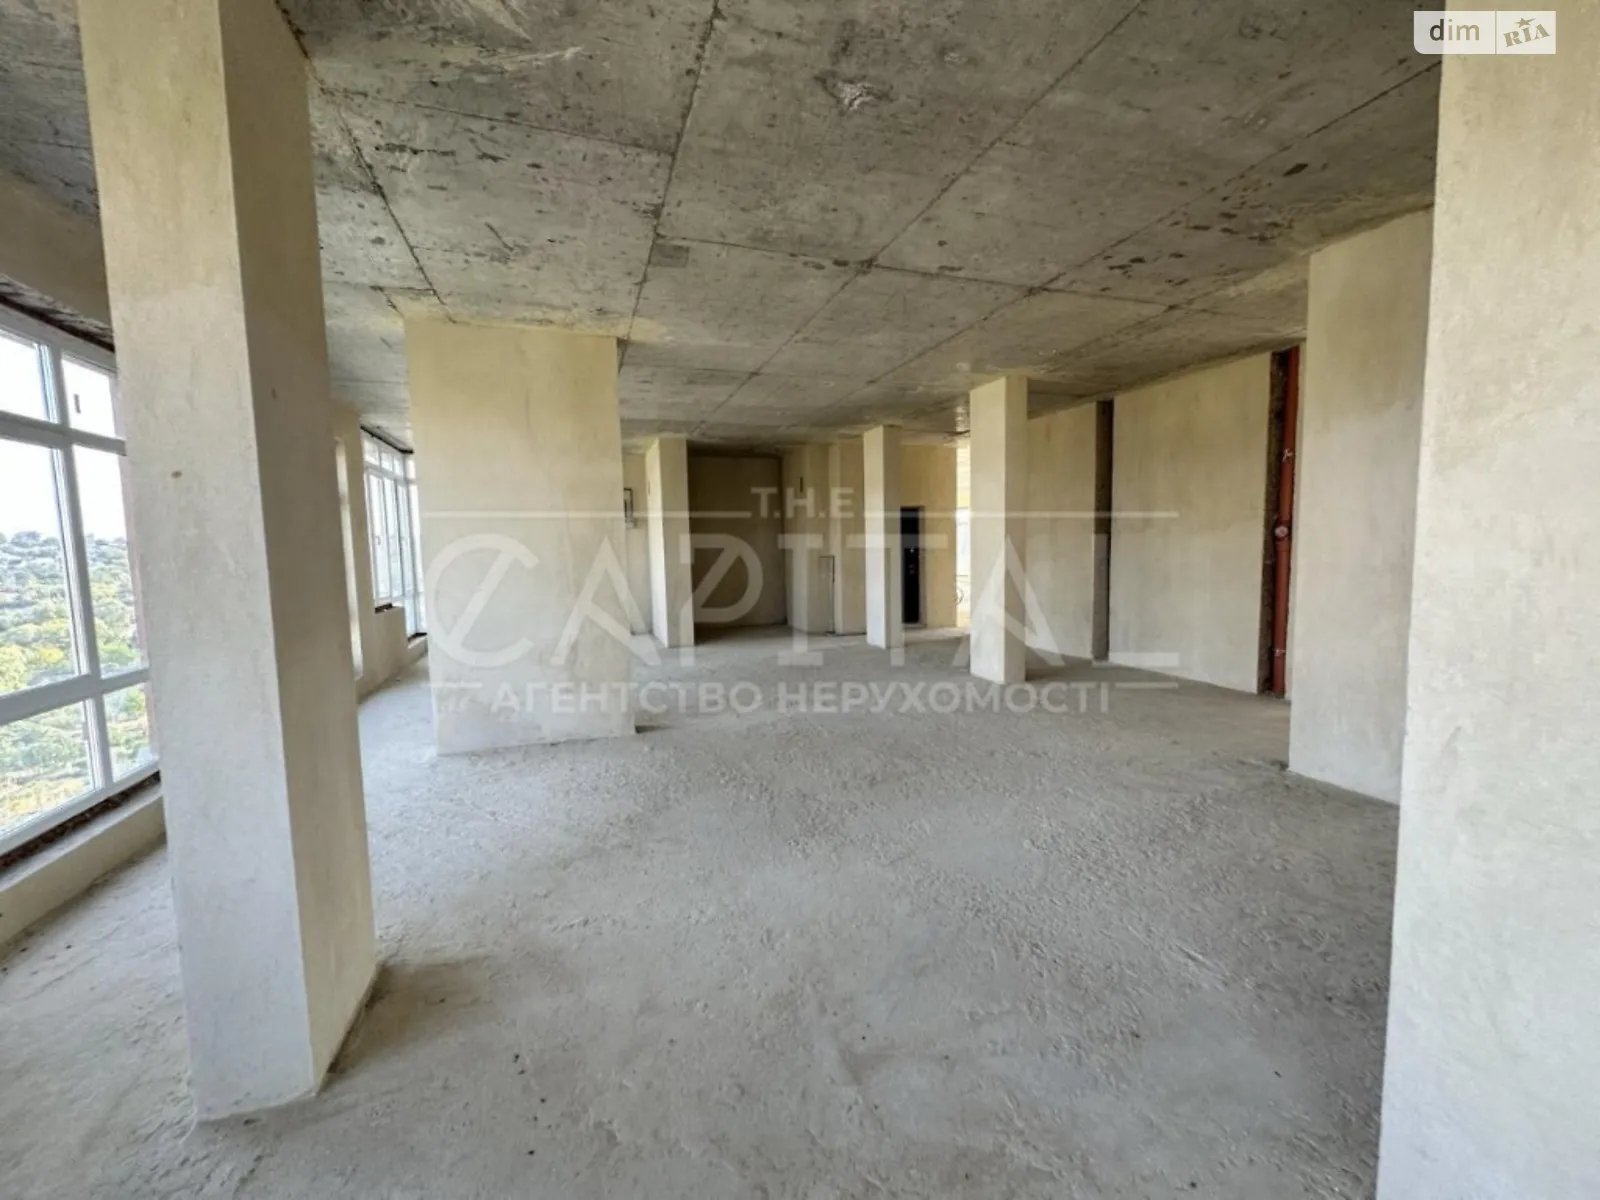 Продается 1-комнатная квартира 46.15 кв. м в Умани - фото 2